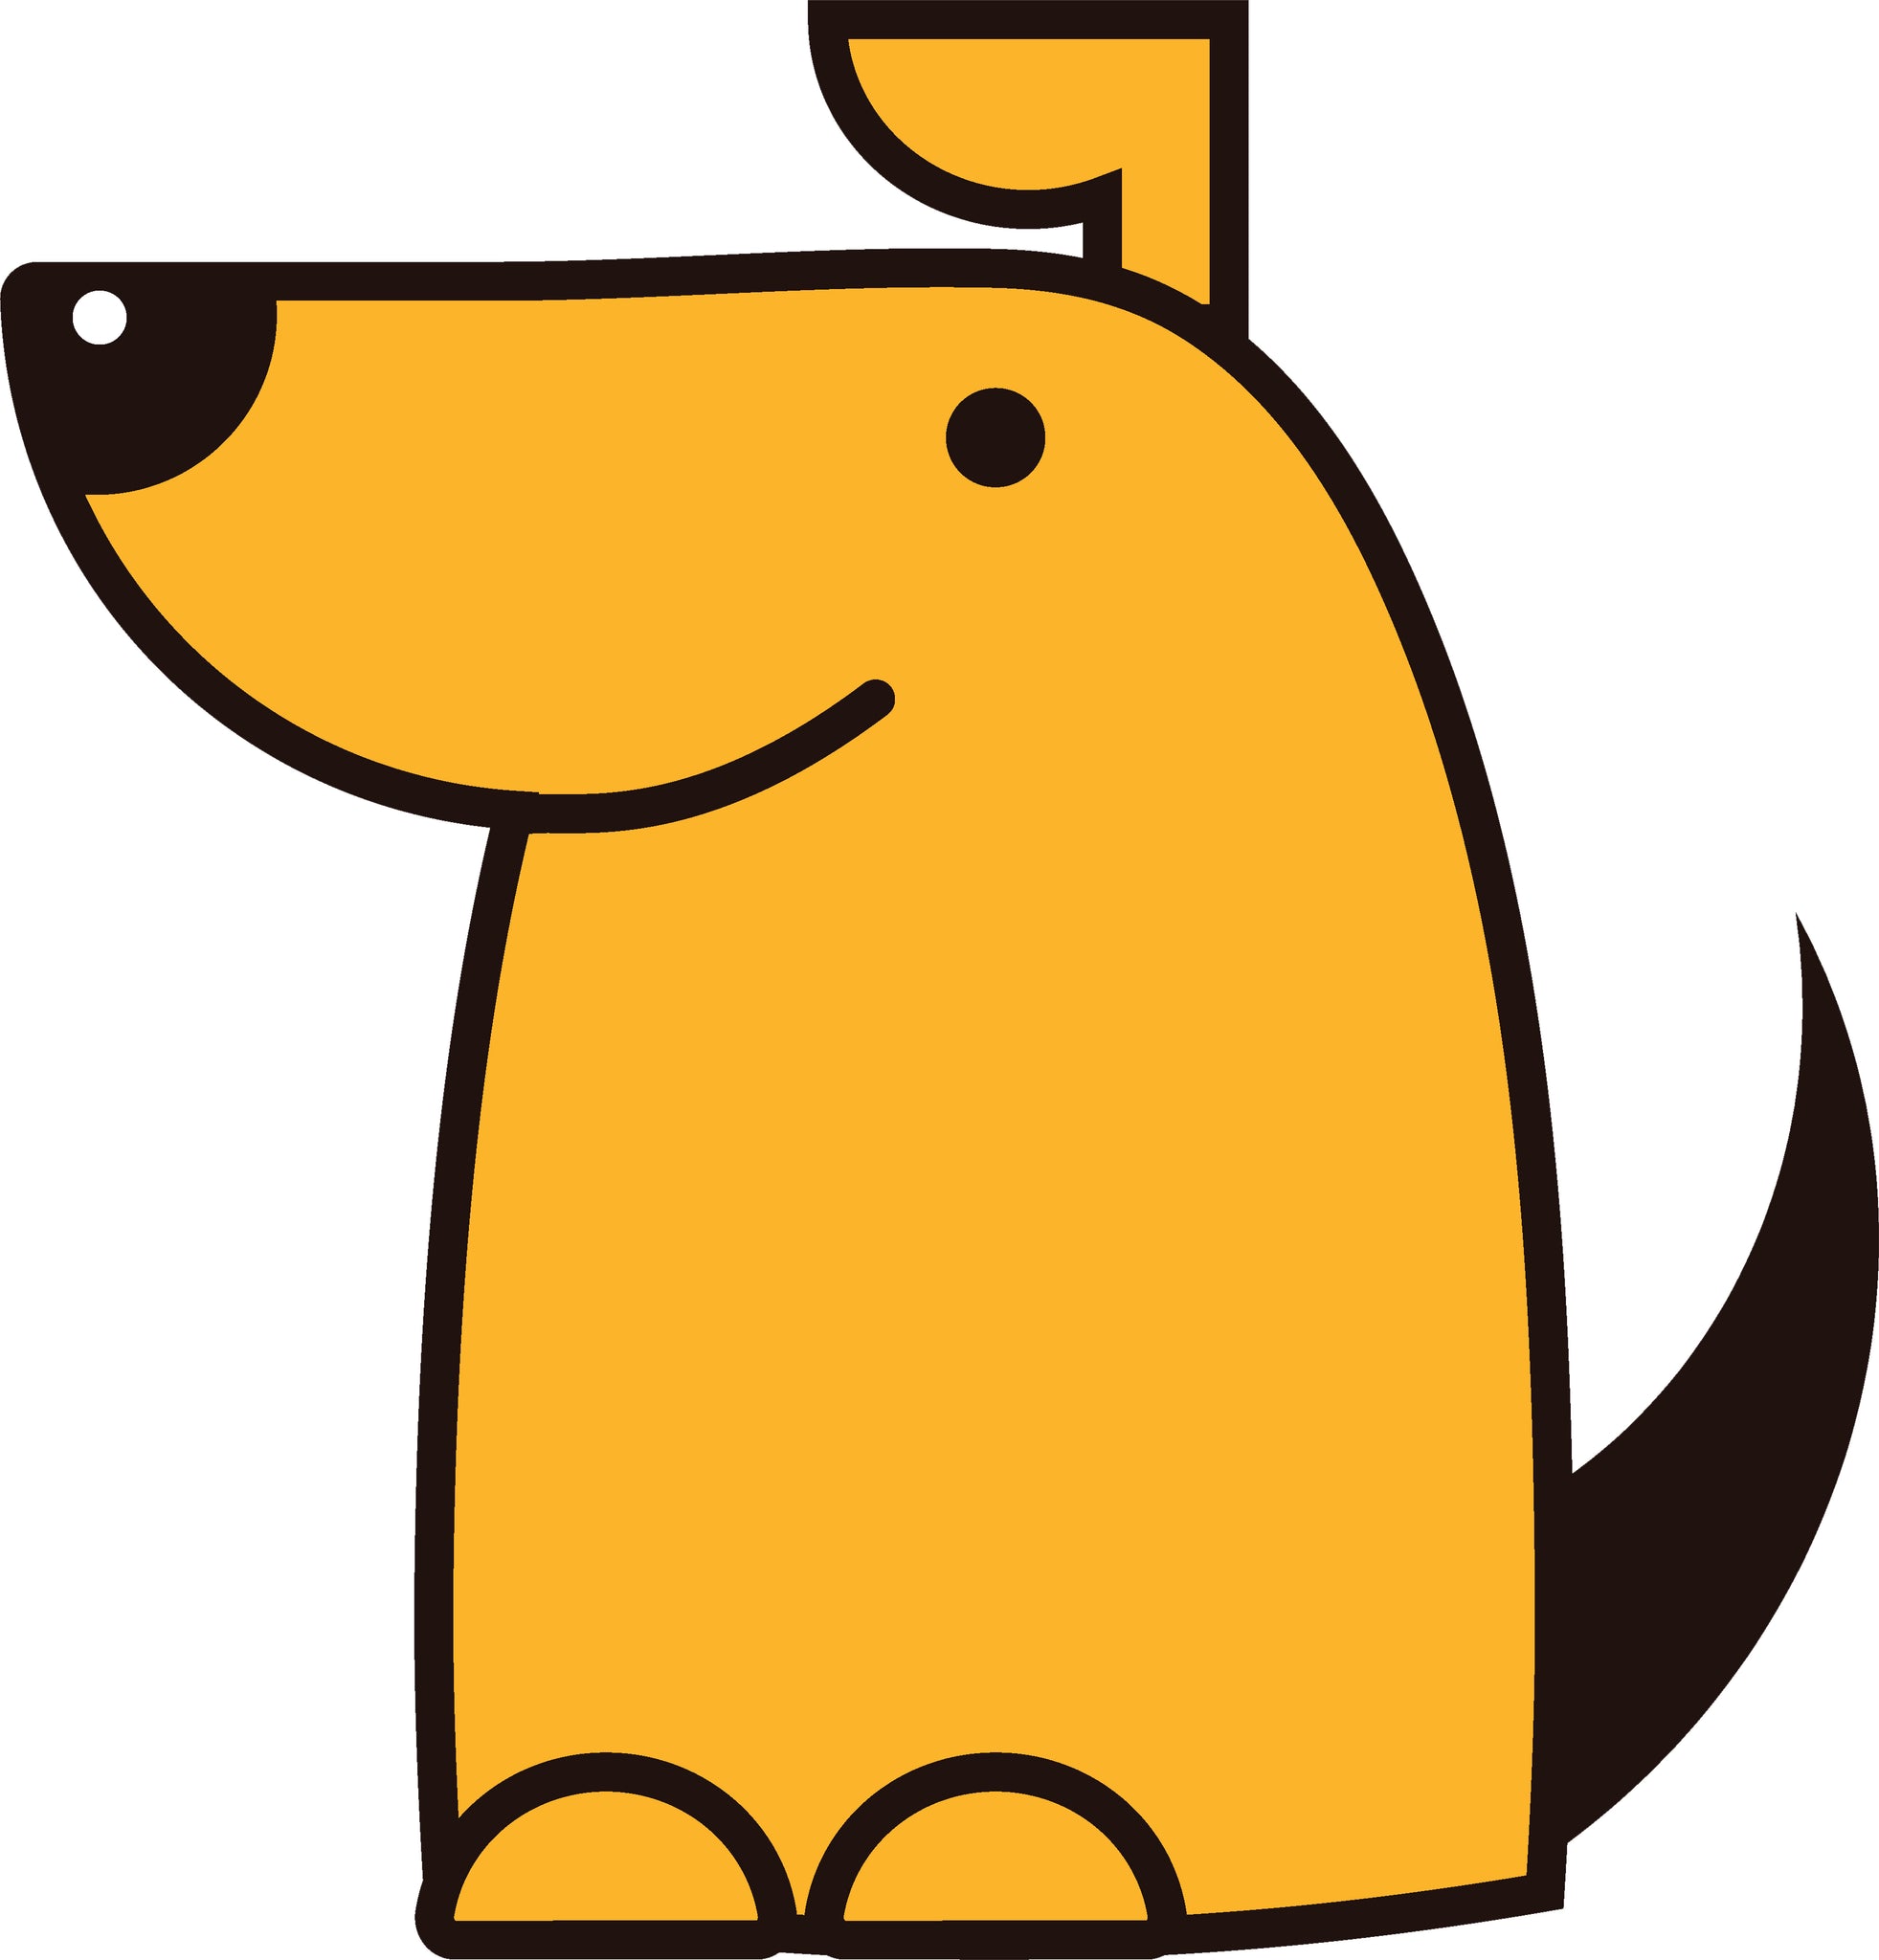 Cute Simple Animal House Pet Cartoon Emoji - Puppy Dog #1 Vinyl Decal Sticker